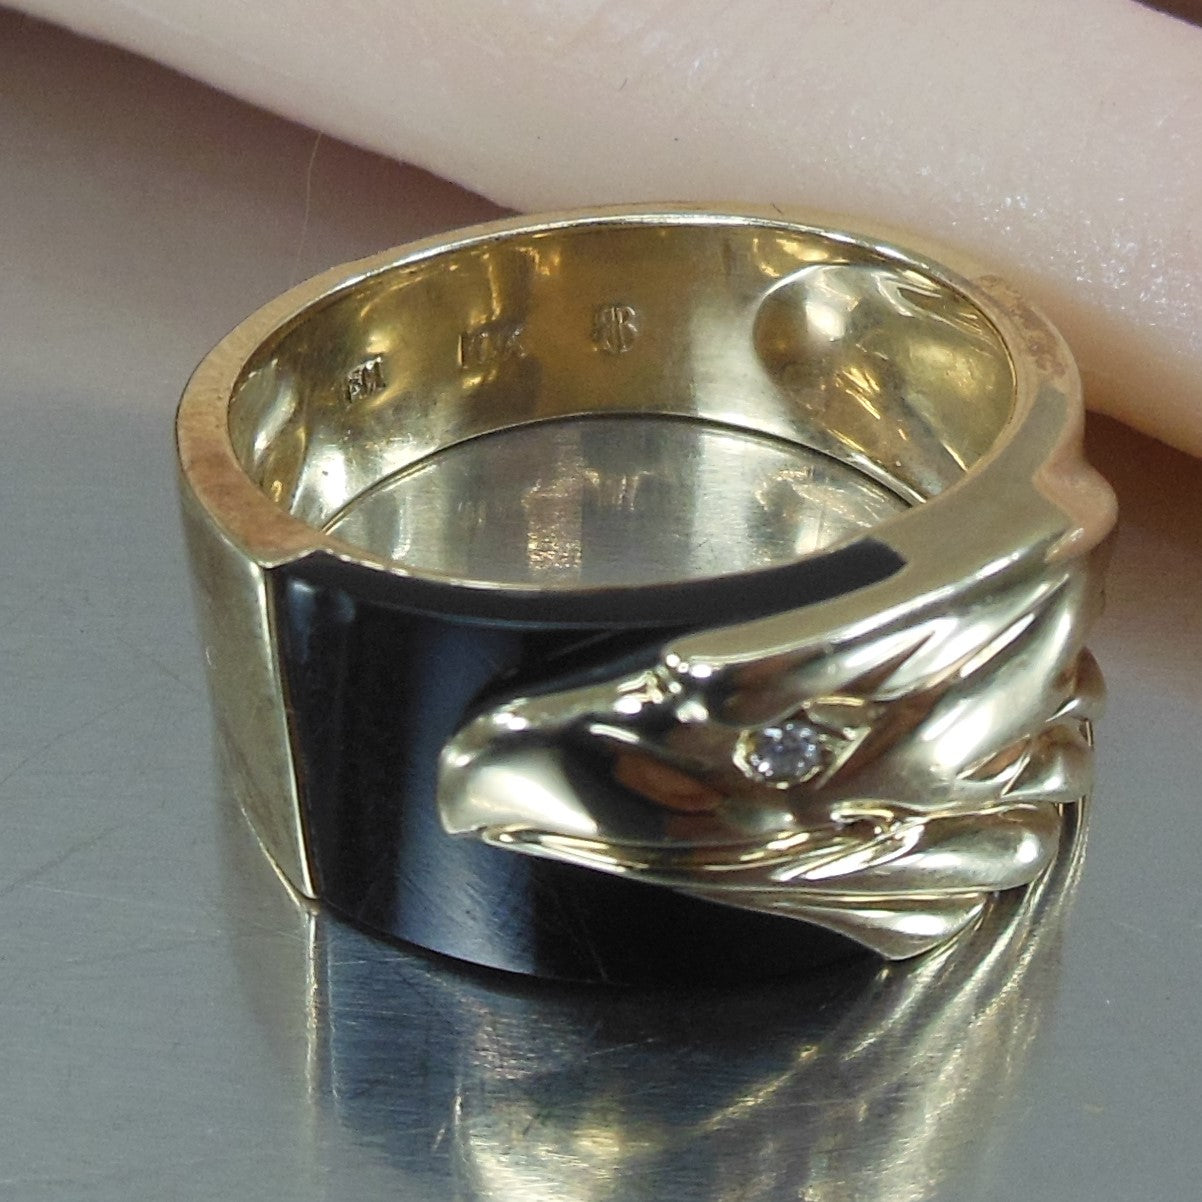 Franklin Mint Men's Ring 10K Yellow Gold Black Onyx Diamond Eagle Size 8.25 Maker Marks